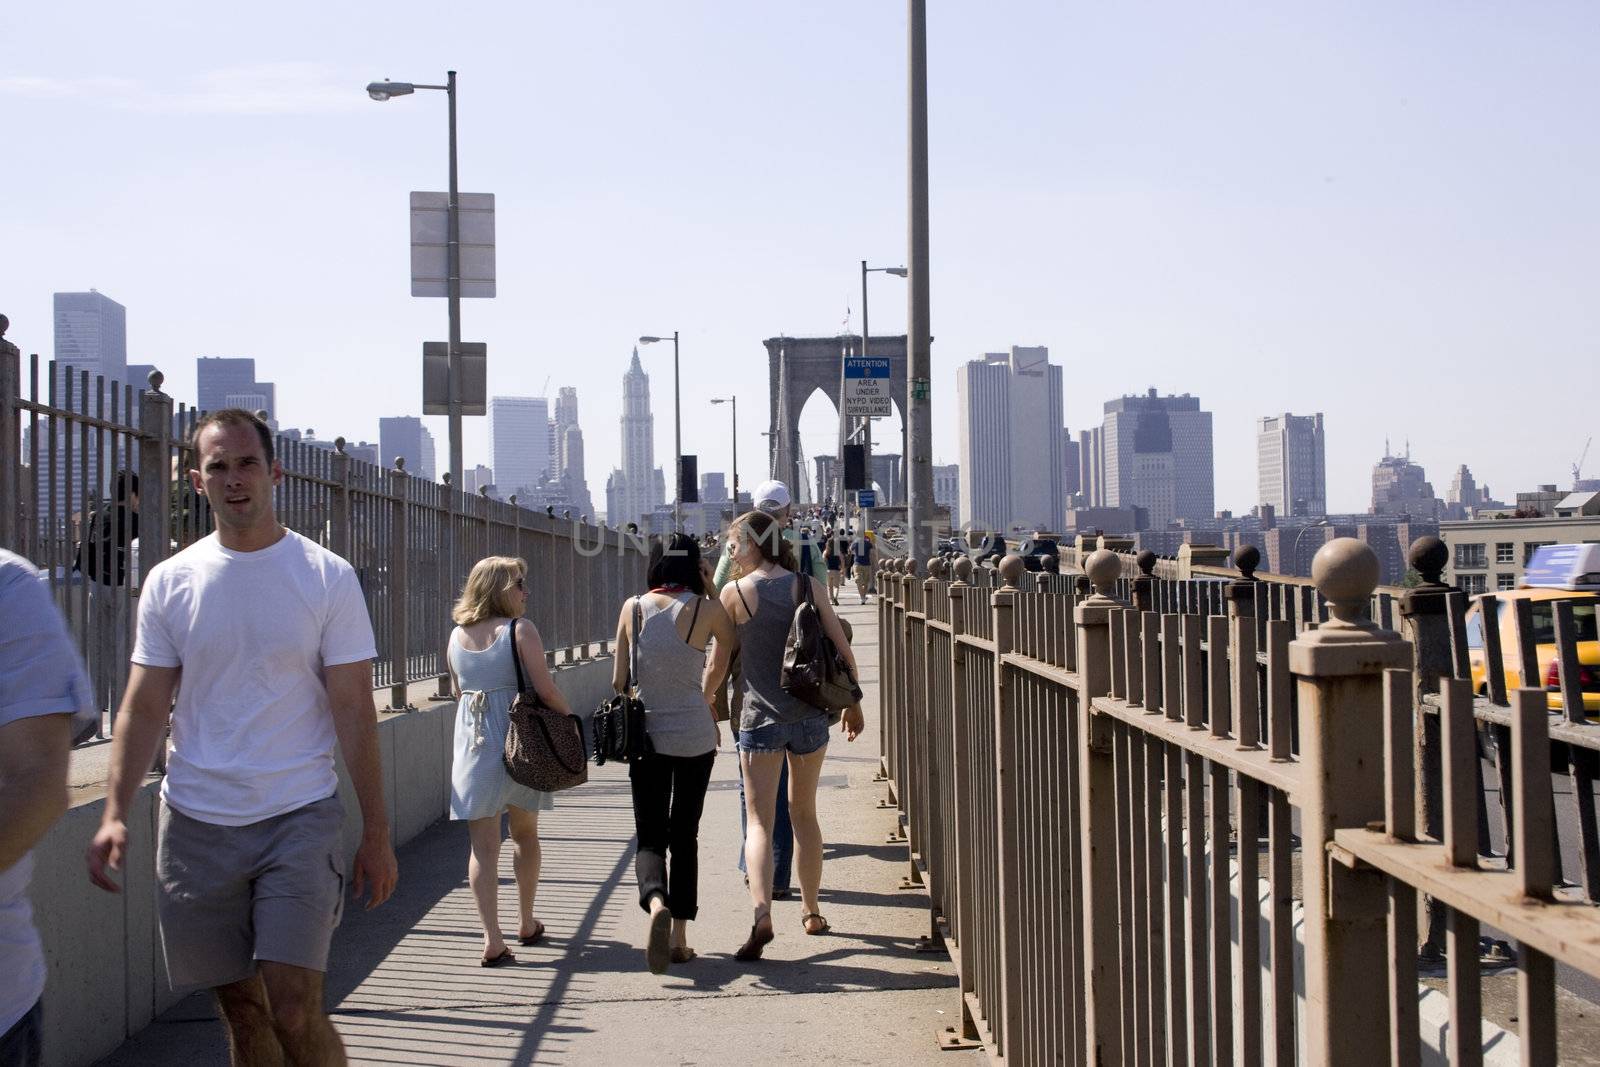 Walking accross the Brooklyn Bridge on Memorial Day 2008.